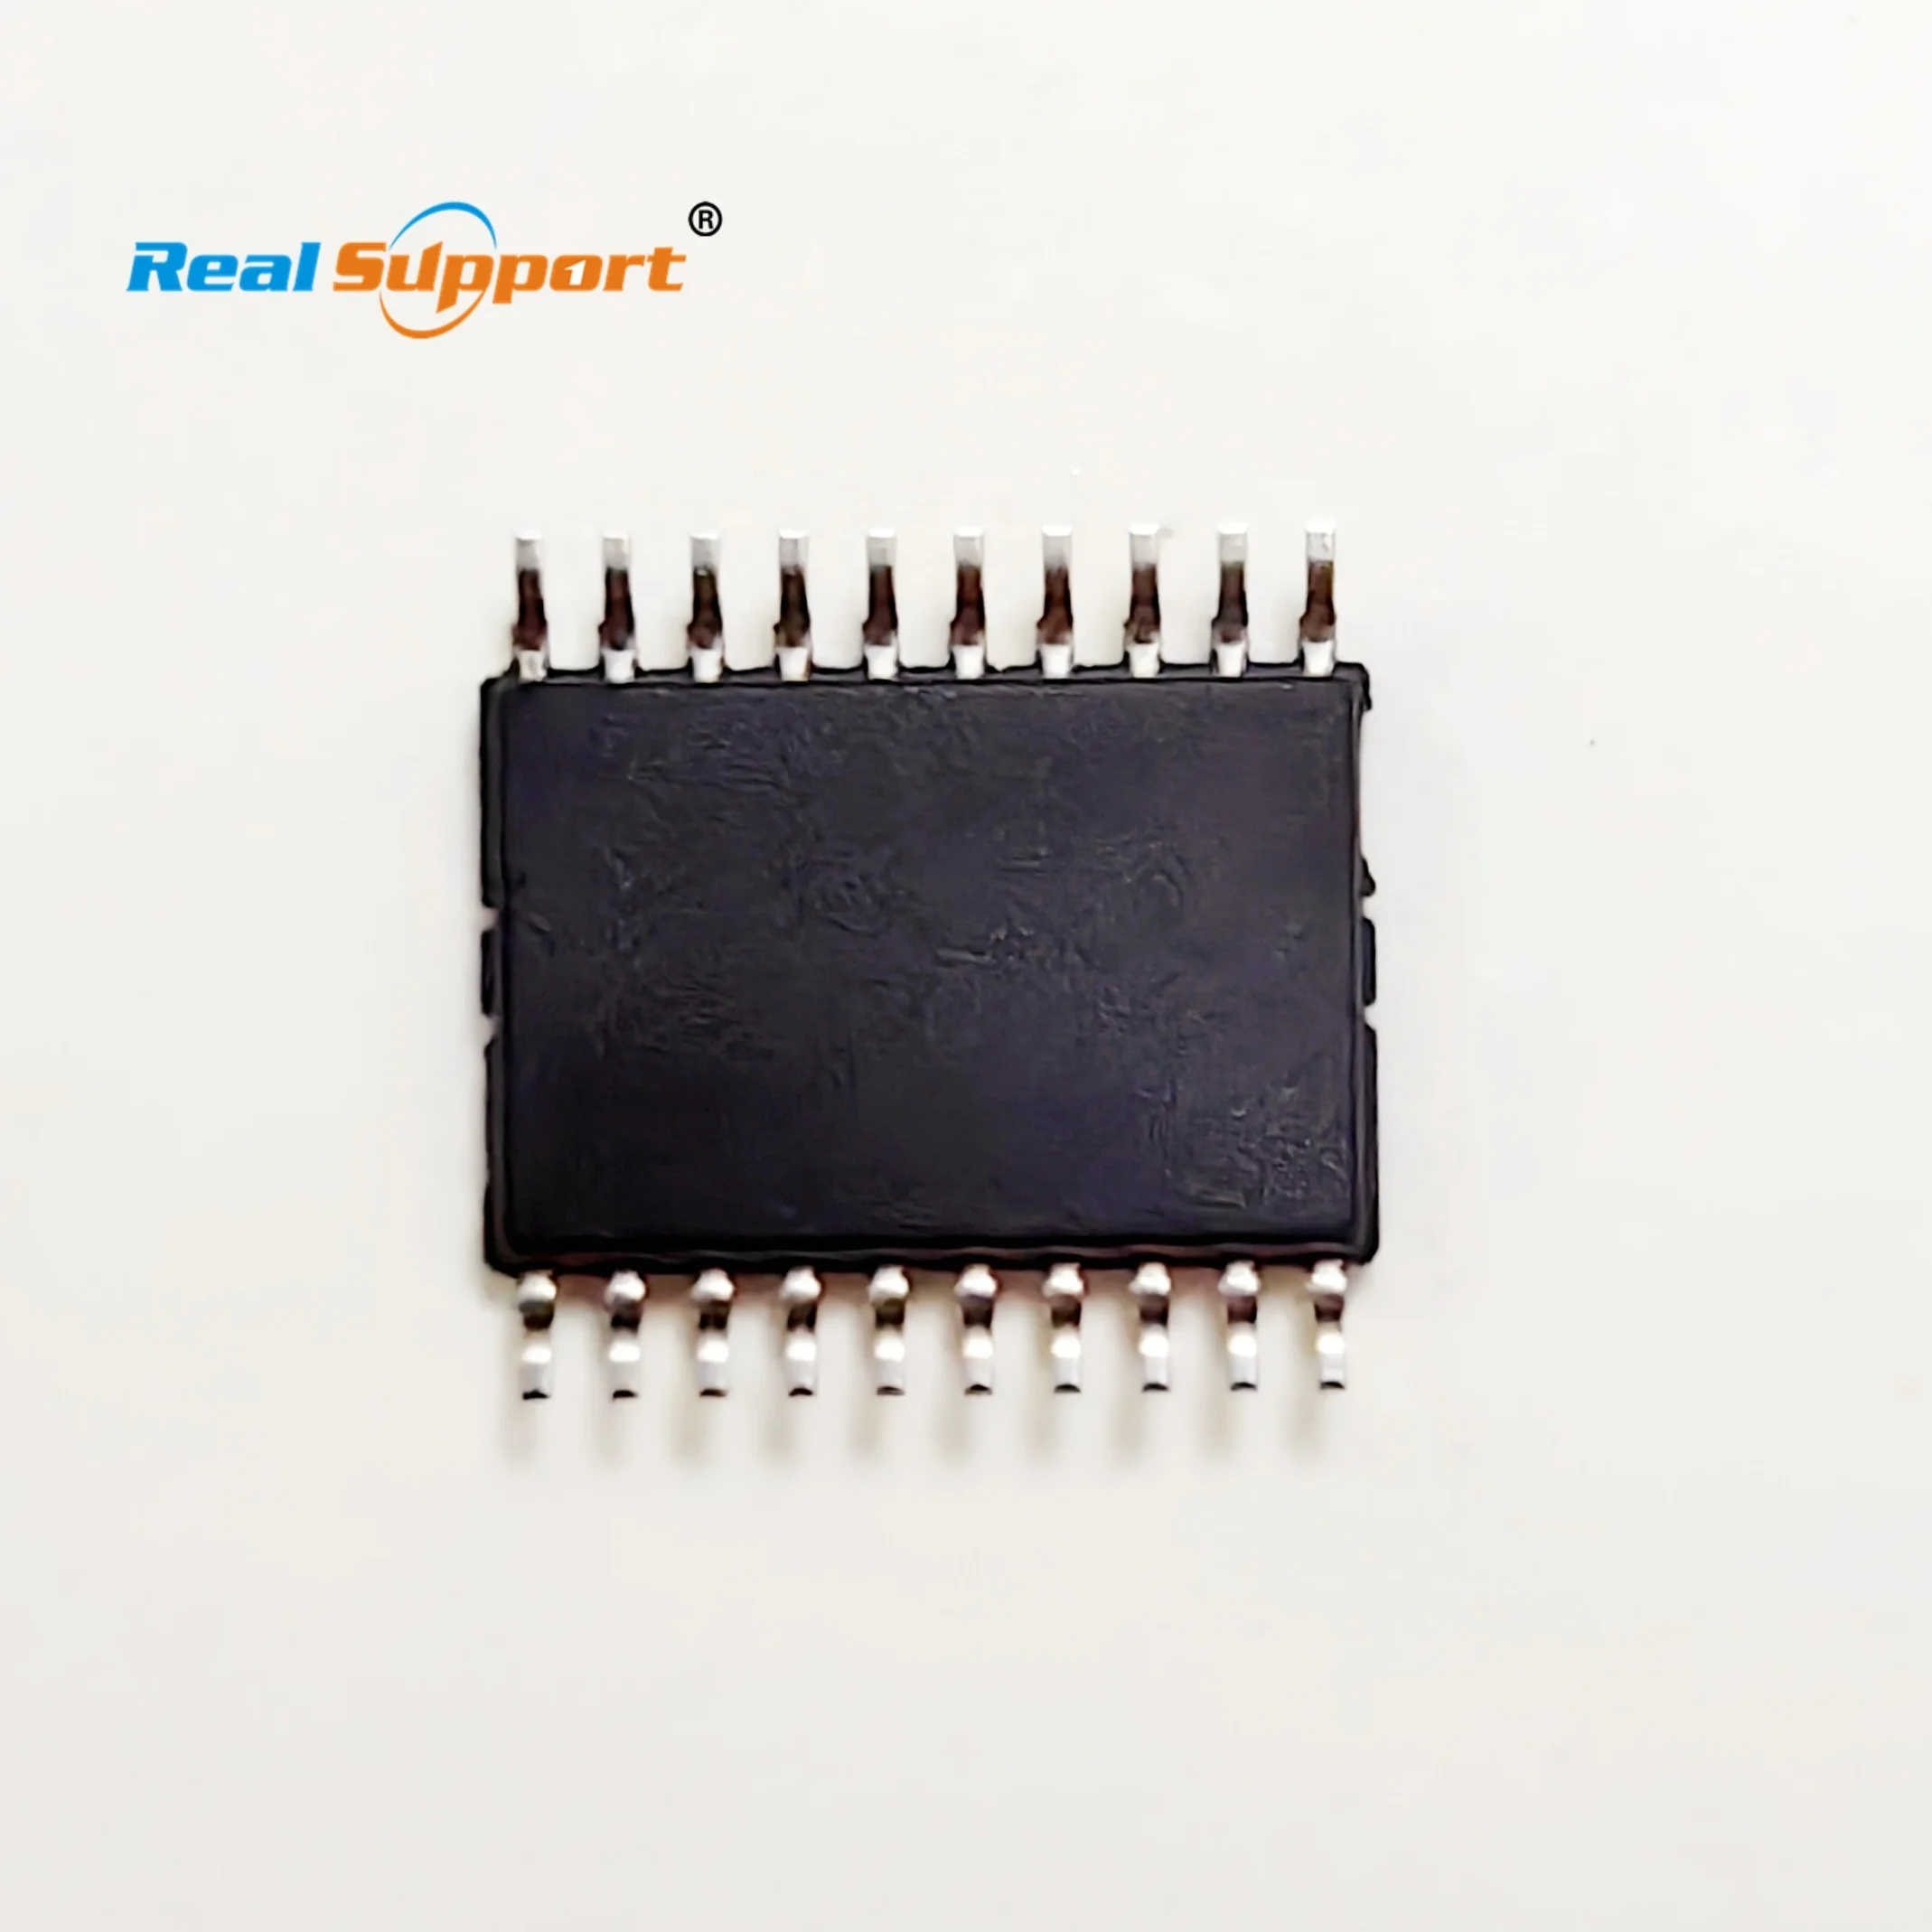 Originalni 8-bitni mikrokontroler STM8S003F3P6 STM8S003F3P6TR STM8S003F3 liniju Mainstream Value line s 8-килобайтным flash procesorom 16 Mhz CPU Microcontroller